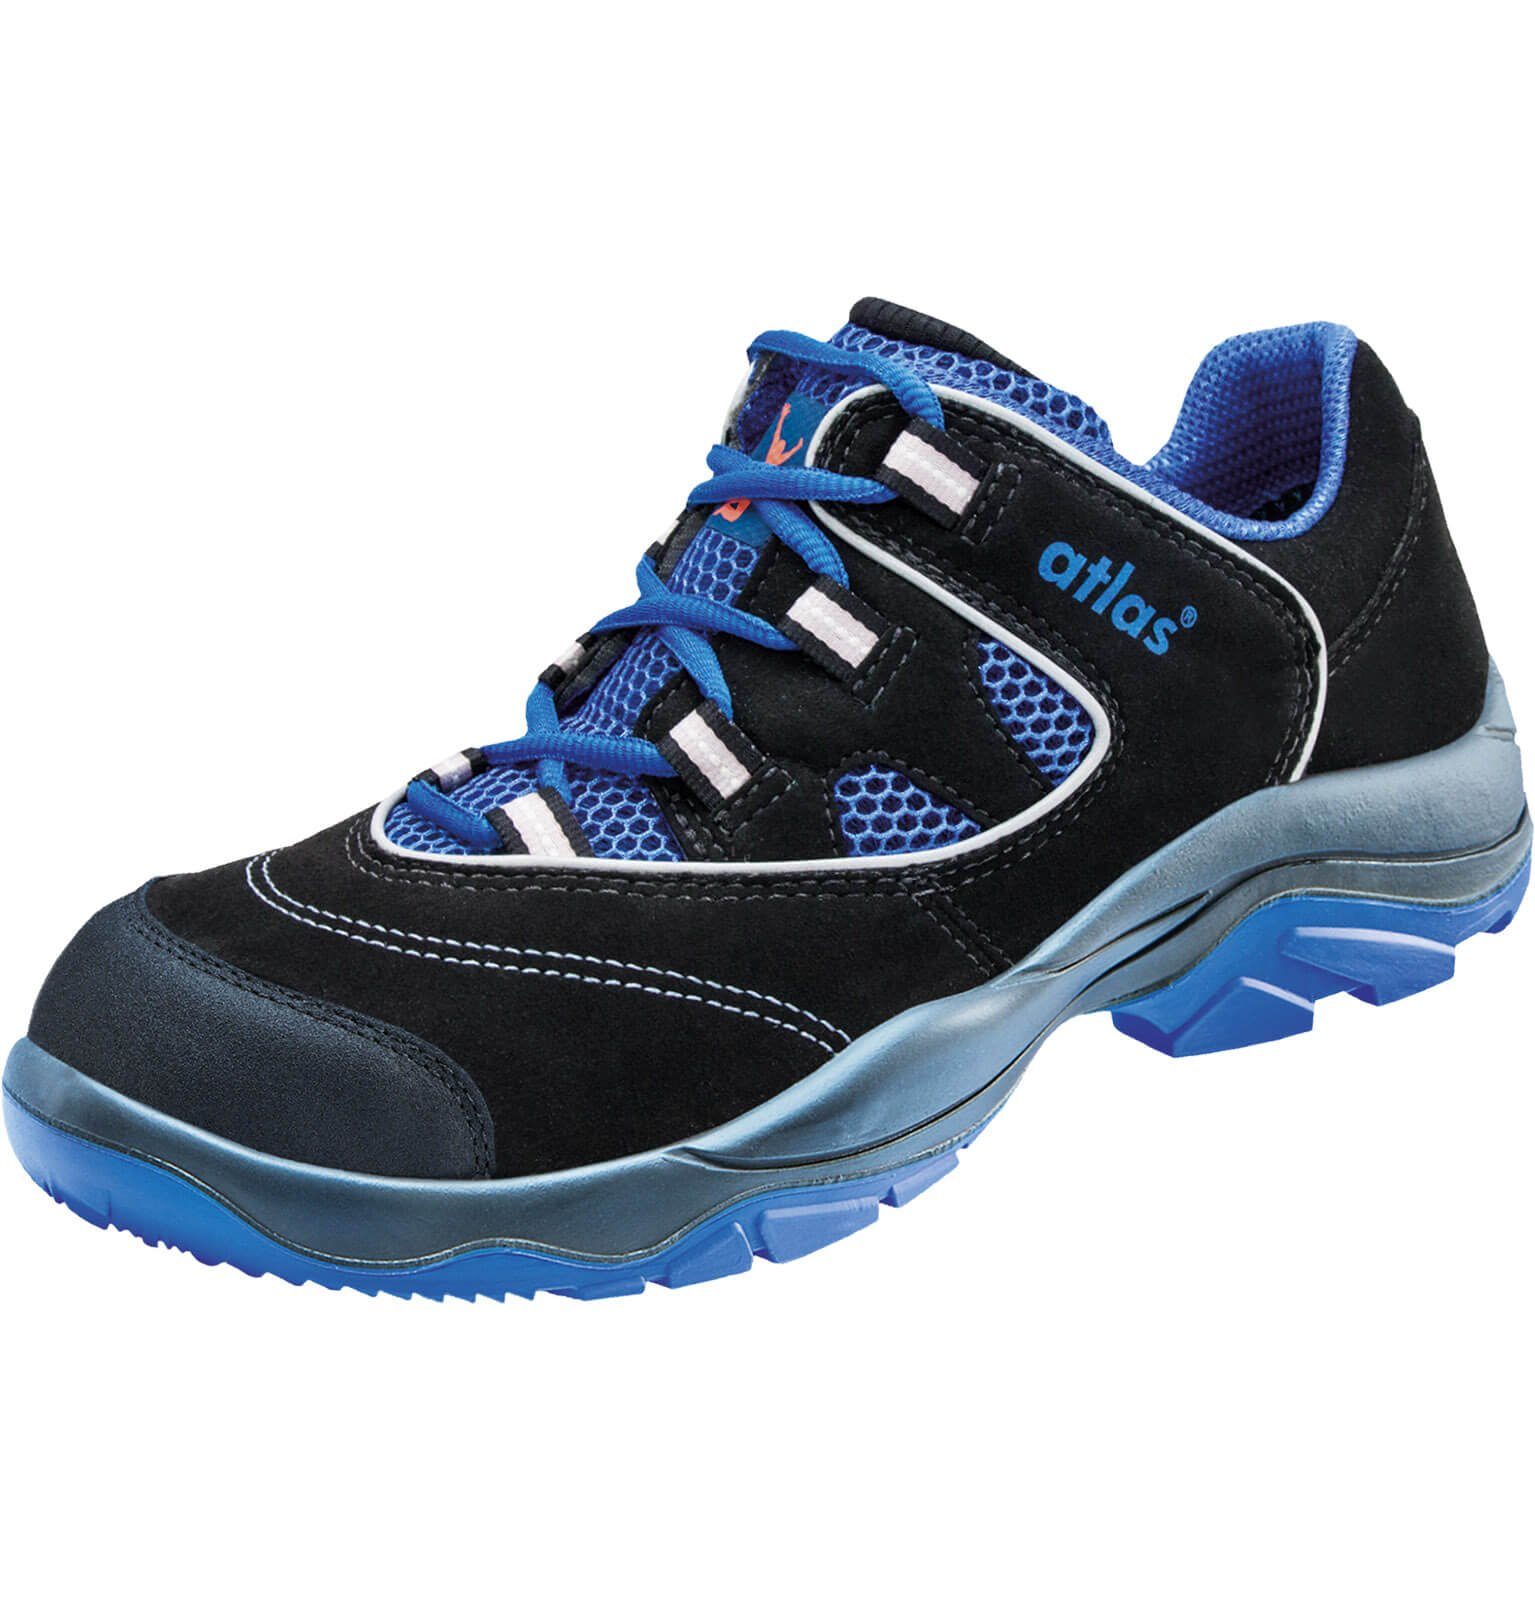 Atlas Schuhe Sicherheitsschuh SRC EN schwarz/blau ISO S1P XP 2.0 20345 205